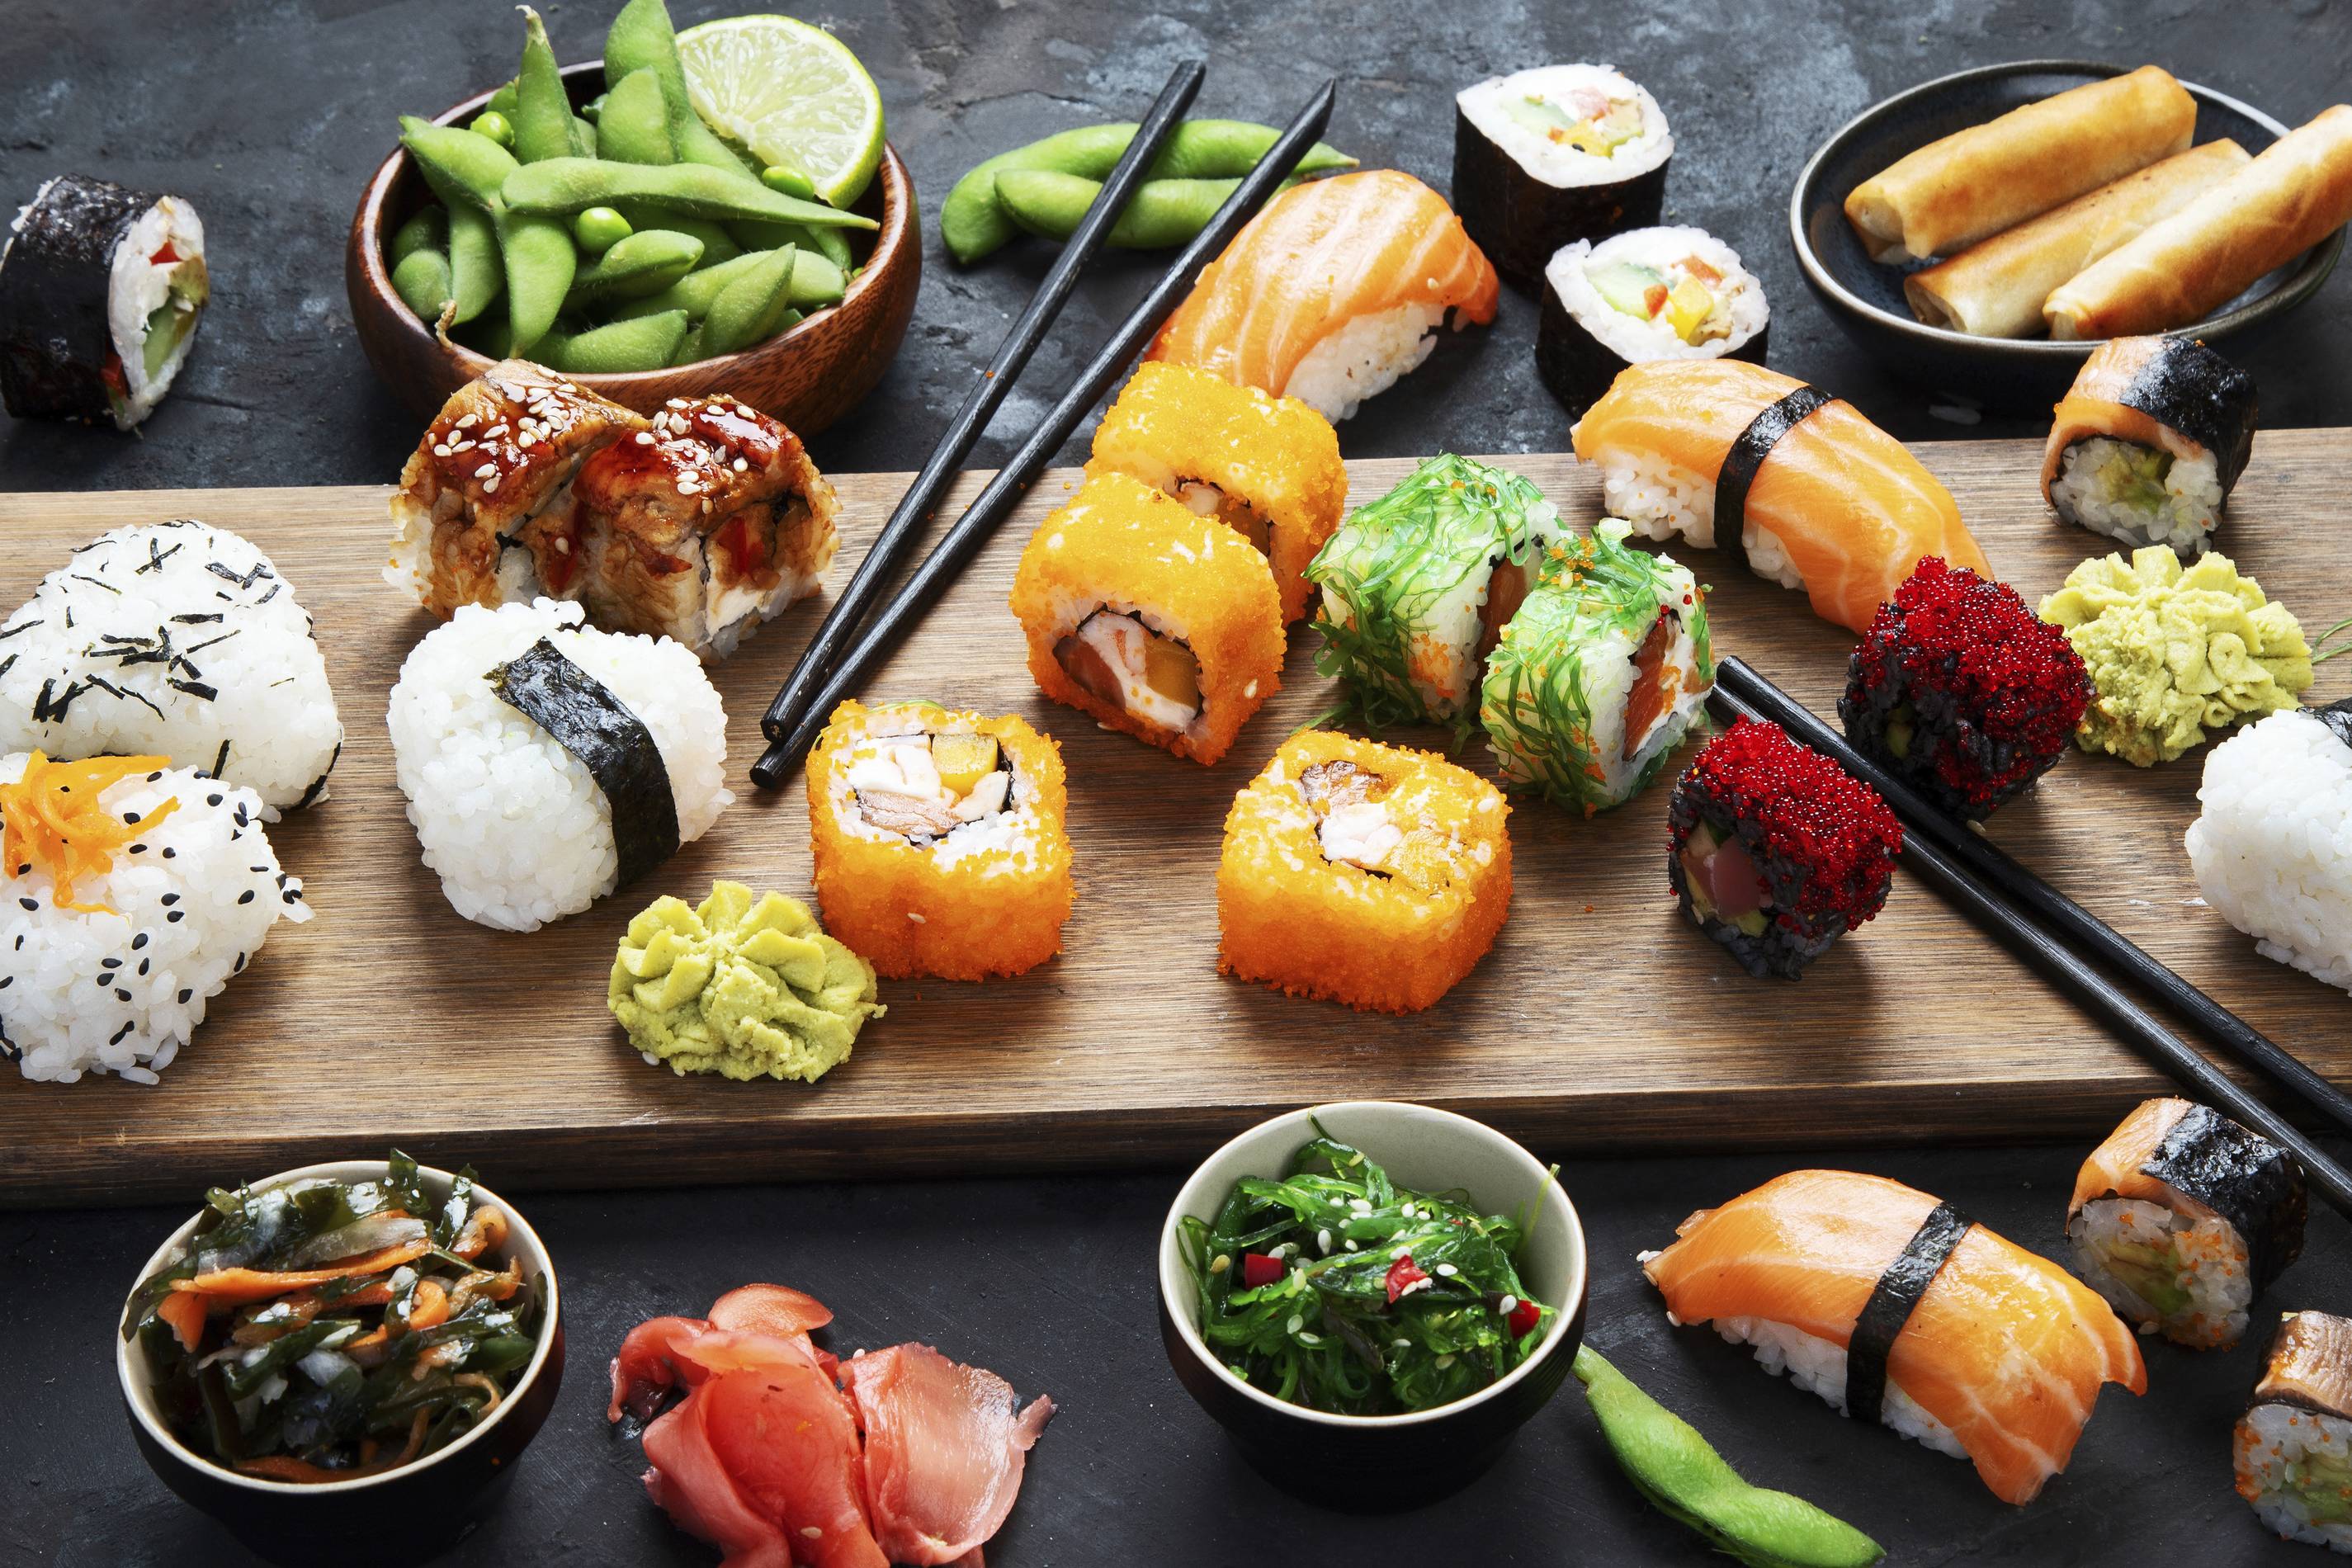 19 Of The Best Sushi Restaurants Across The U.S.